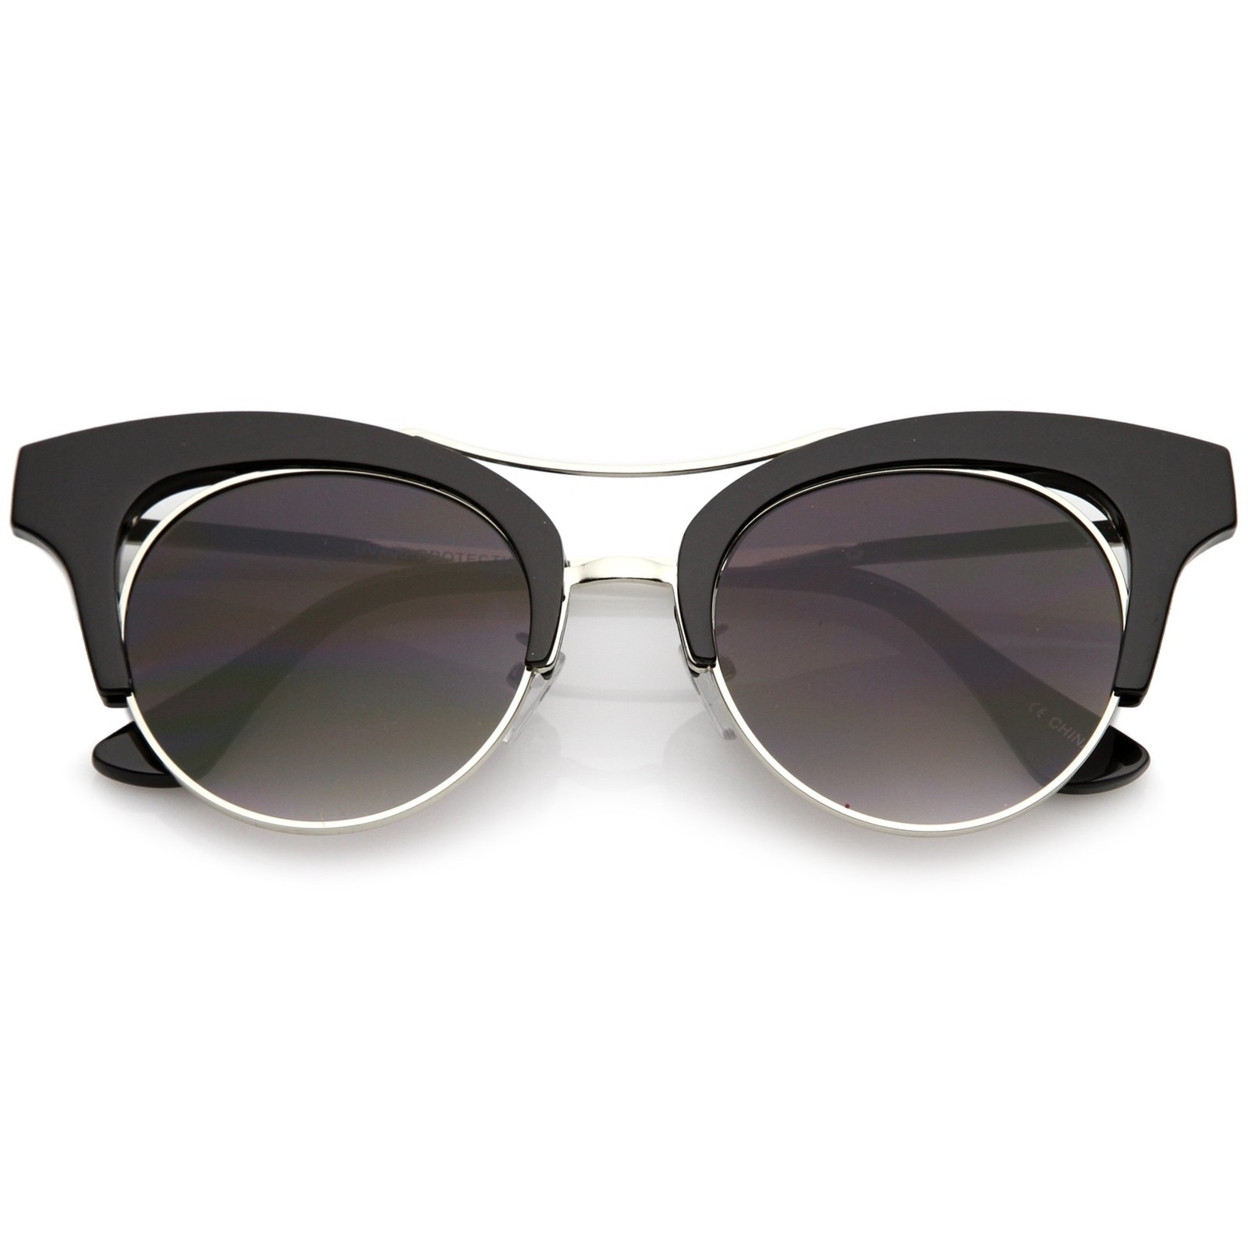 Women's Oversize Cutout Metal Brow Bar Round Flat Lens Cat Eye Sunglasses 51mm - Tortoise-Gold / Amber